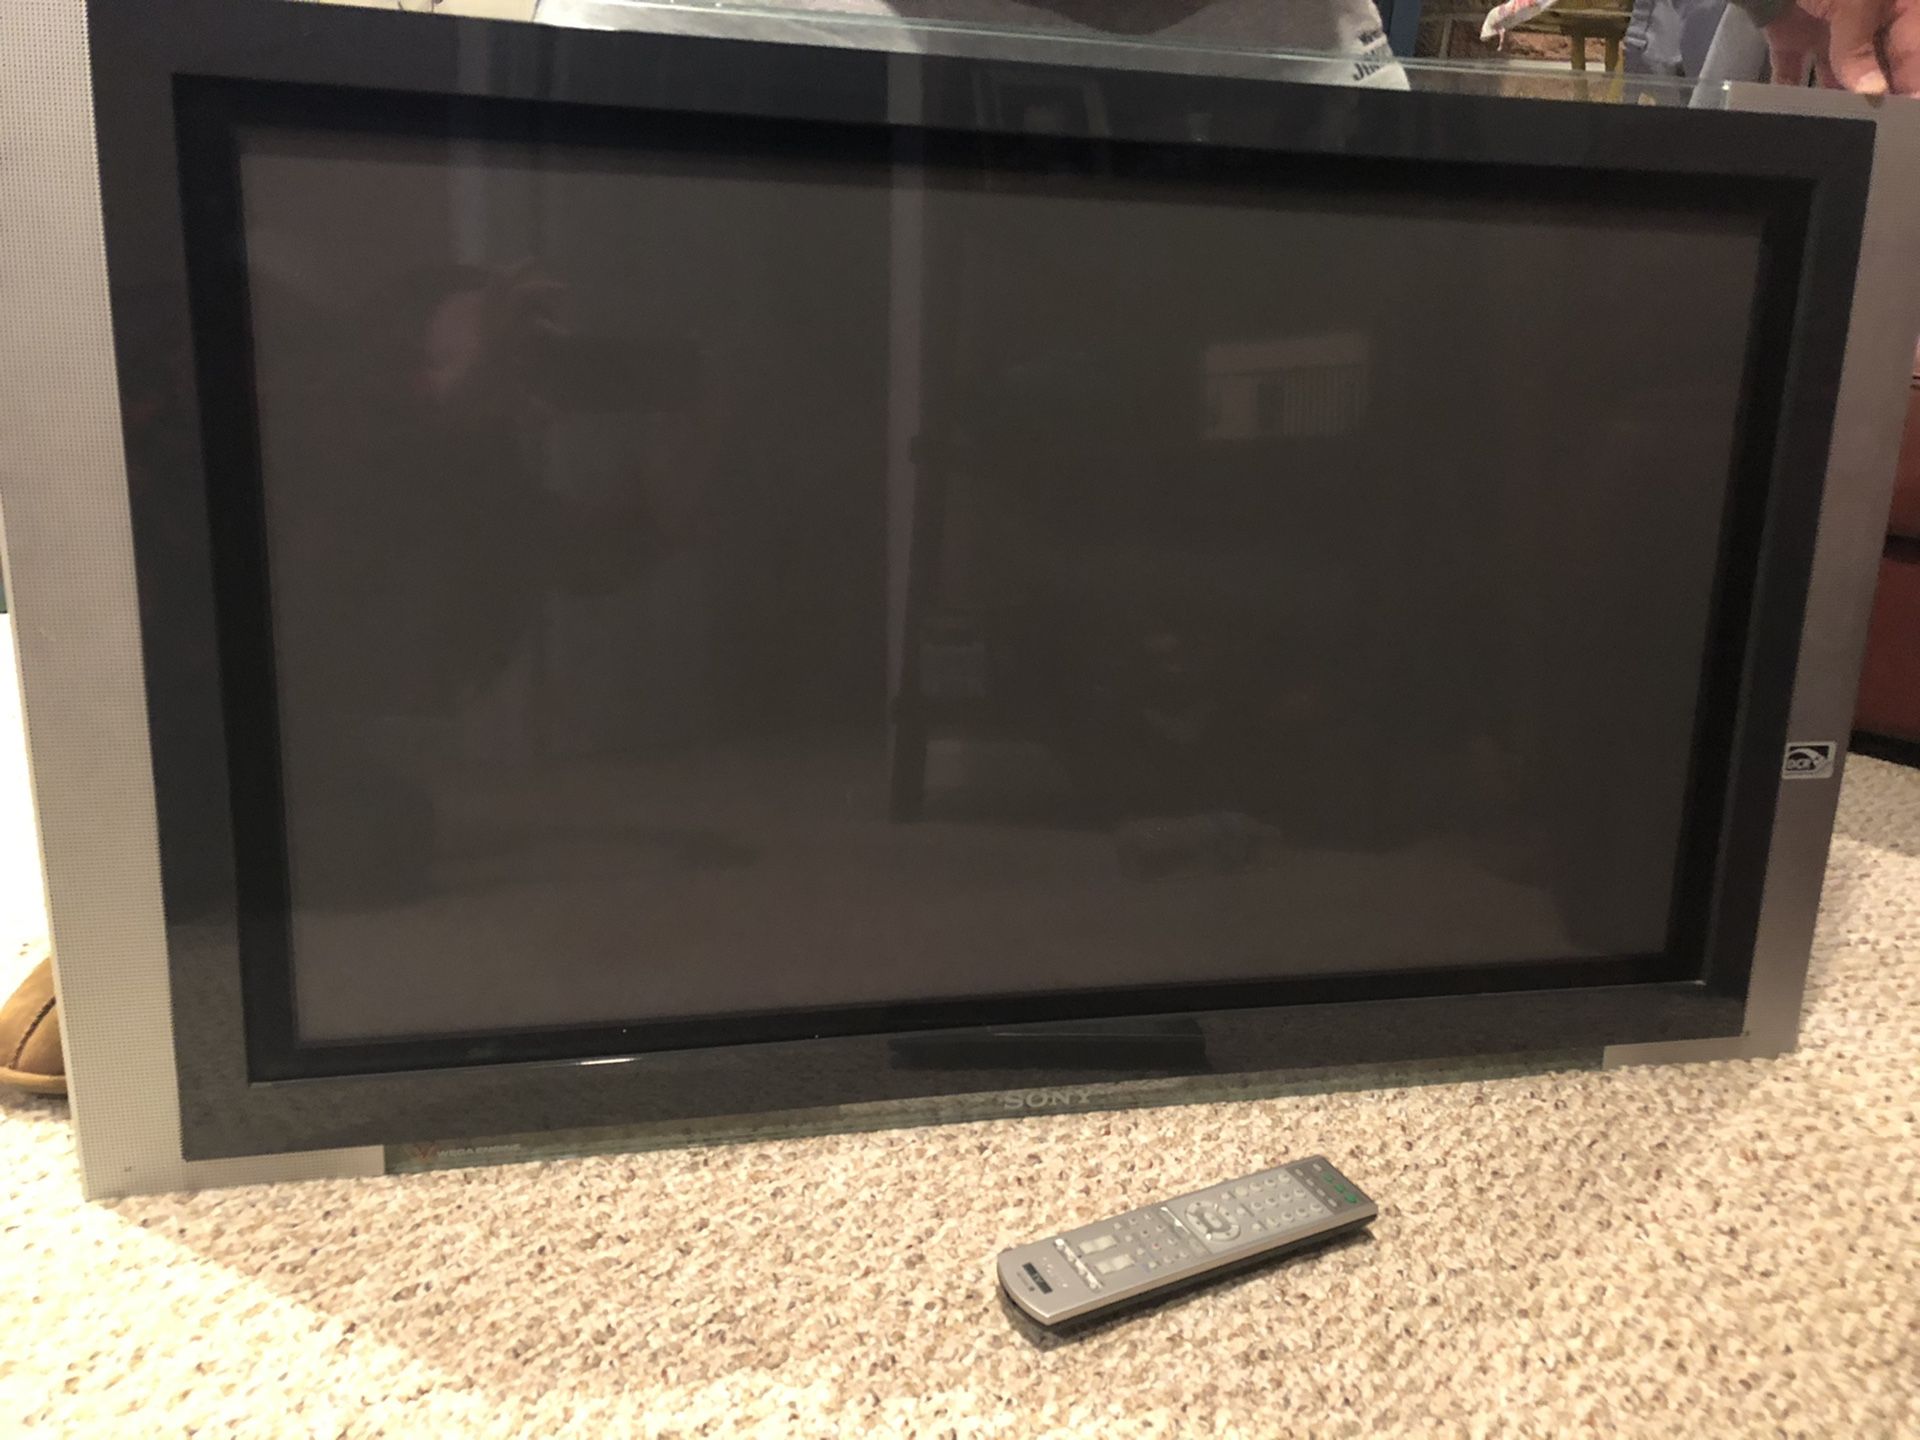 Sony wega 40 inch plasma tv with wall mount and remote